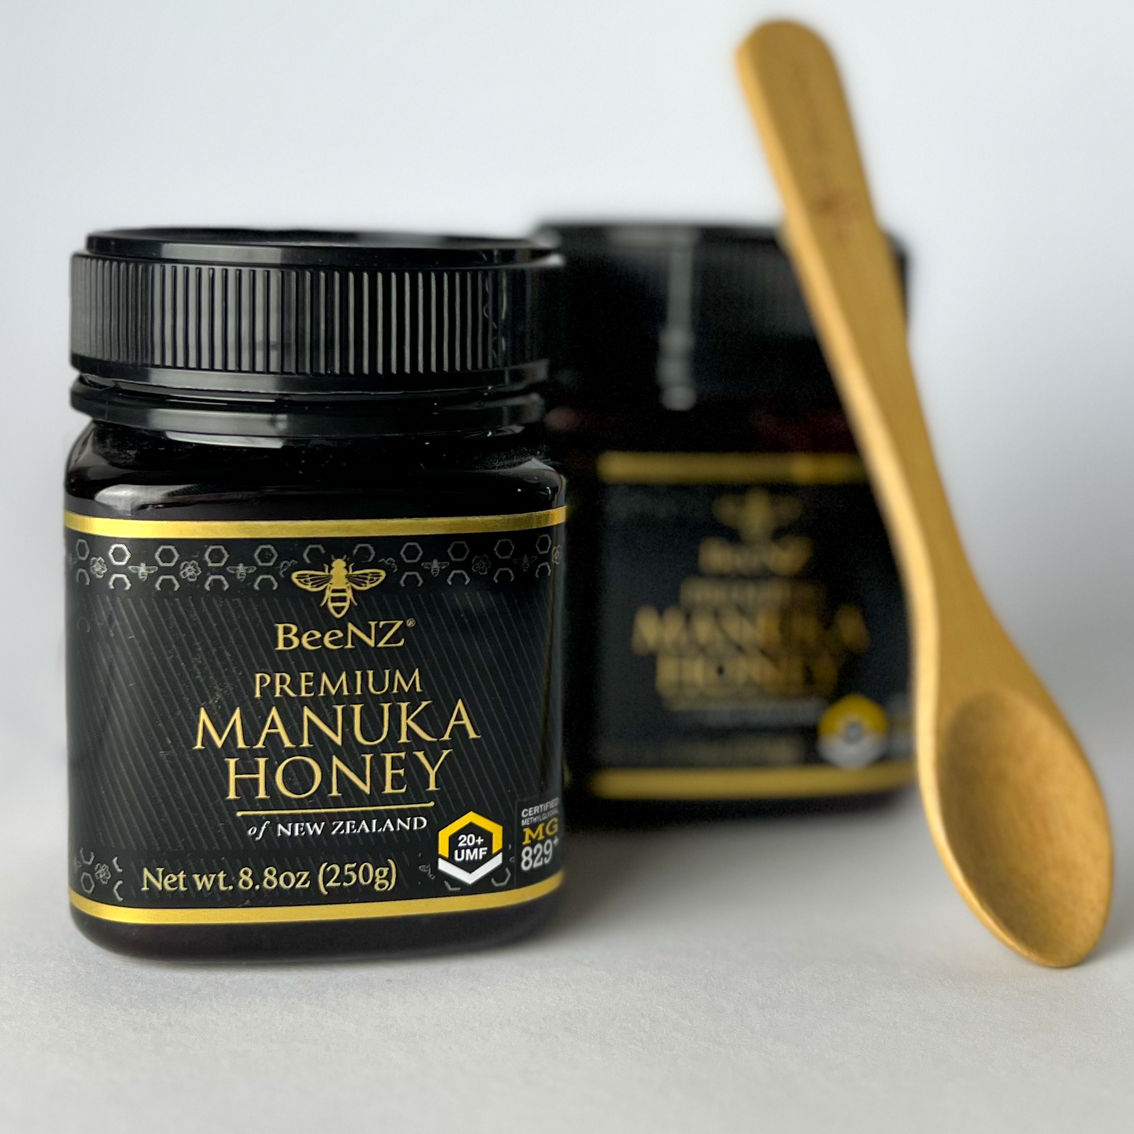 BeeNZ Premium Manuka Honey - Image 3 of 3